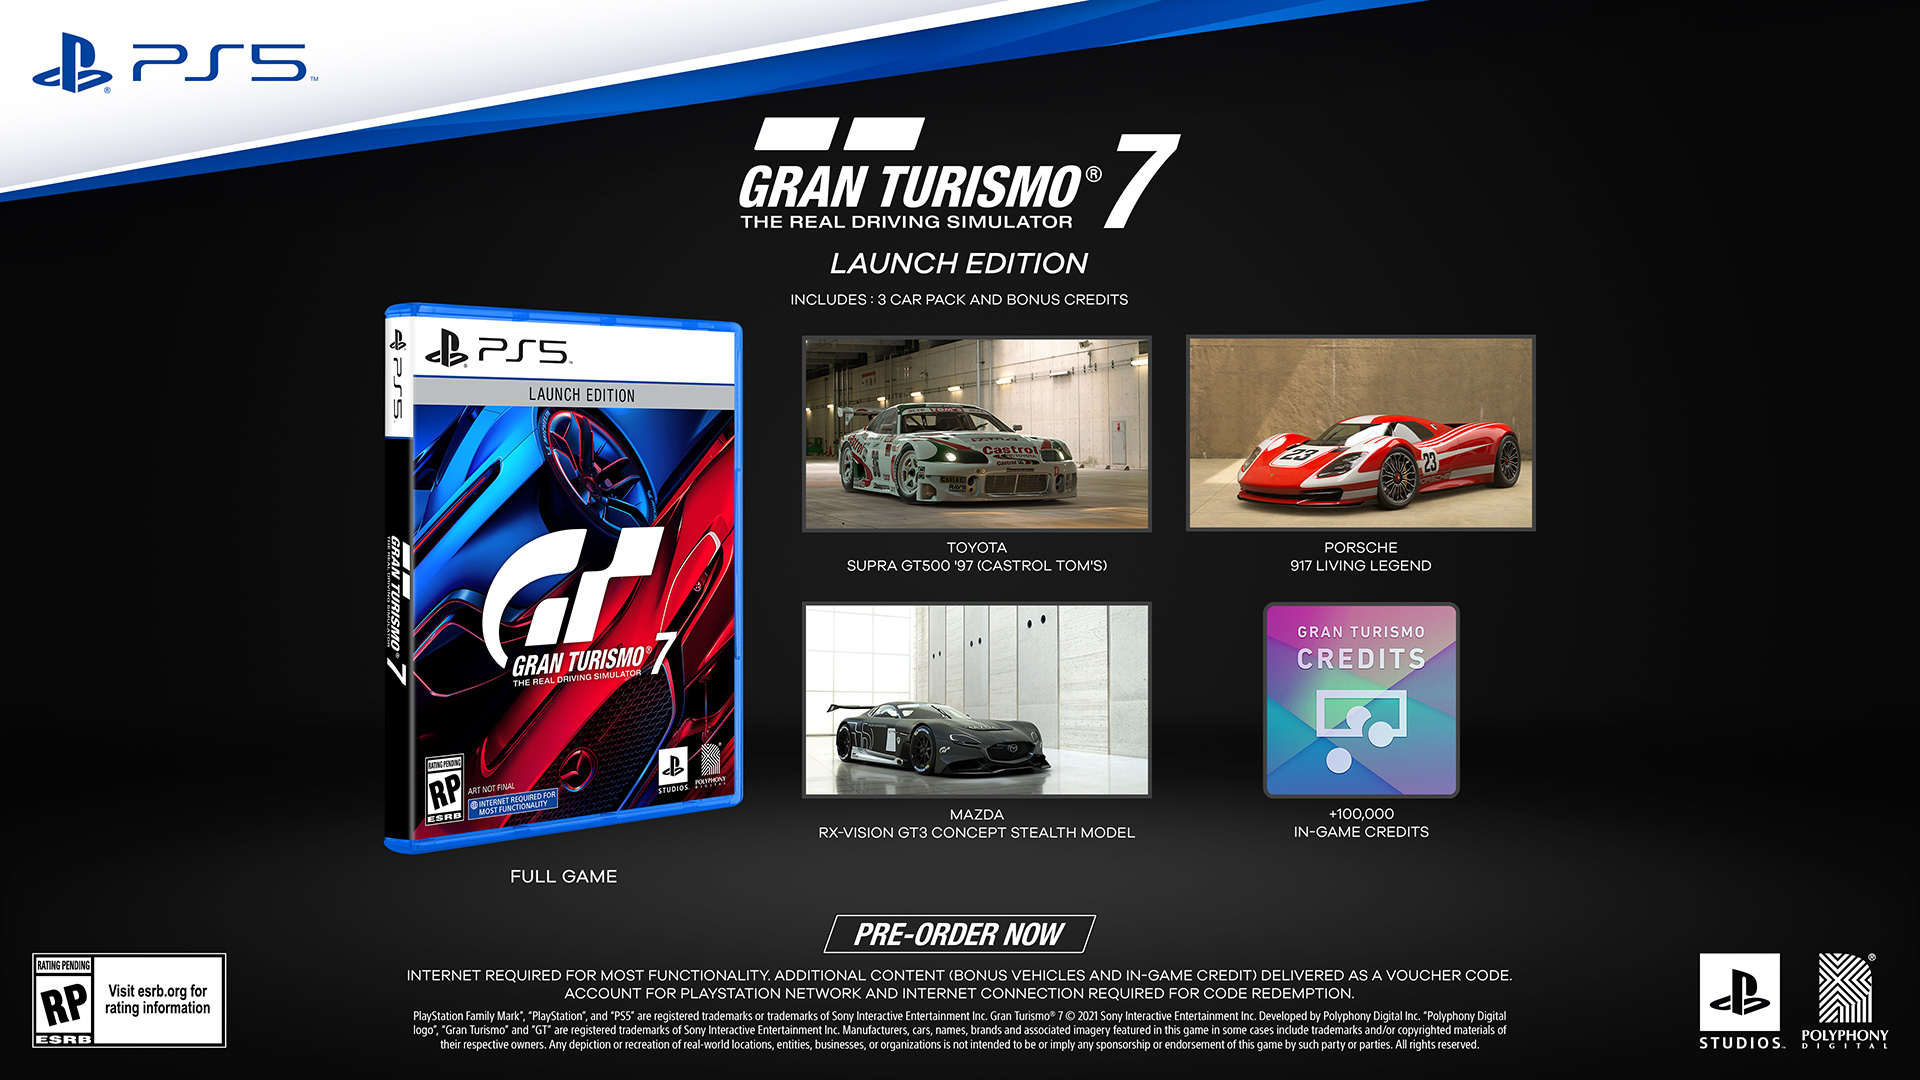 Sony PS5 Gran Turismo 7 25th Anniversary Edition Video Game - US